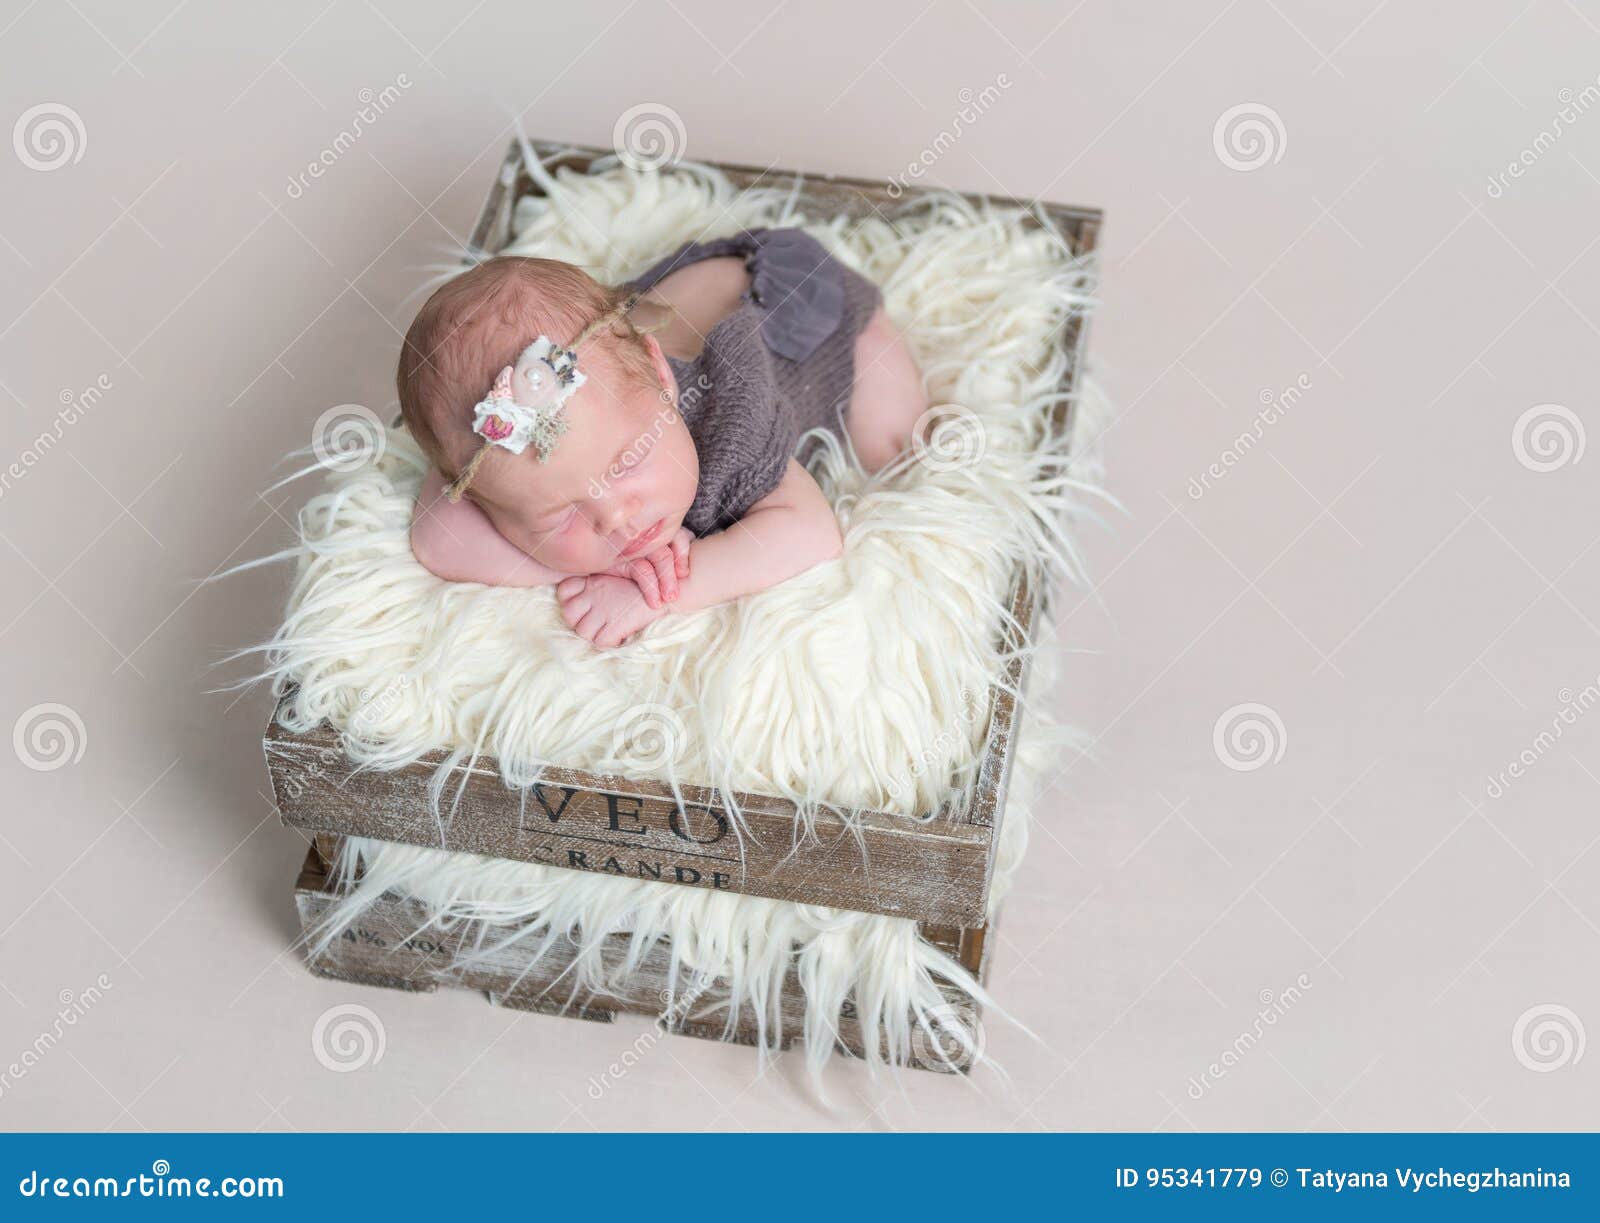 Sweet Cute Baby Girl Sleeping on Her Belly Stock Image - Image of ...